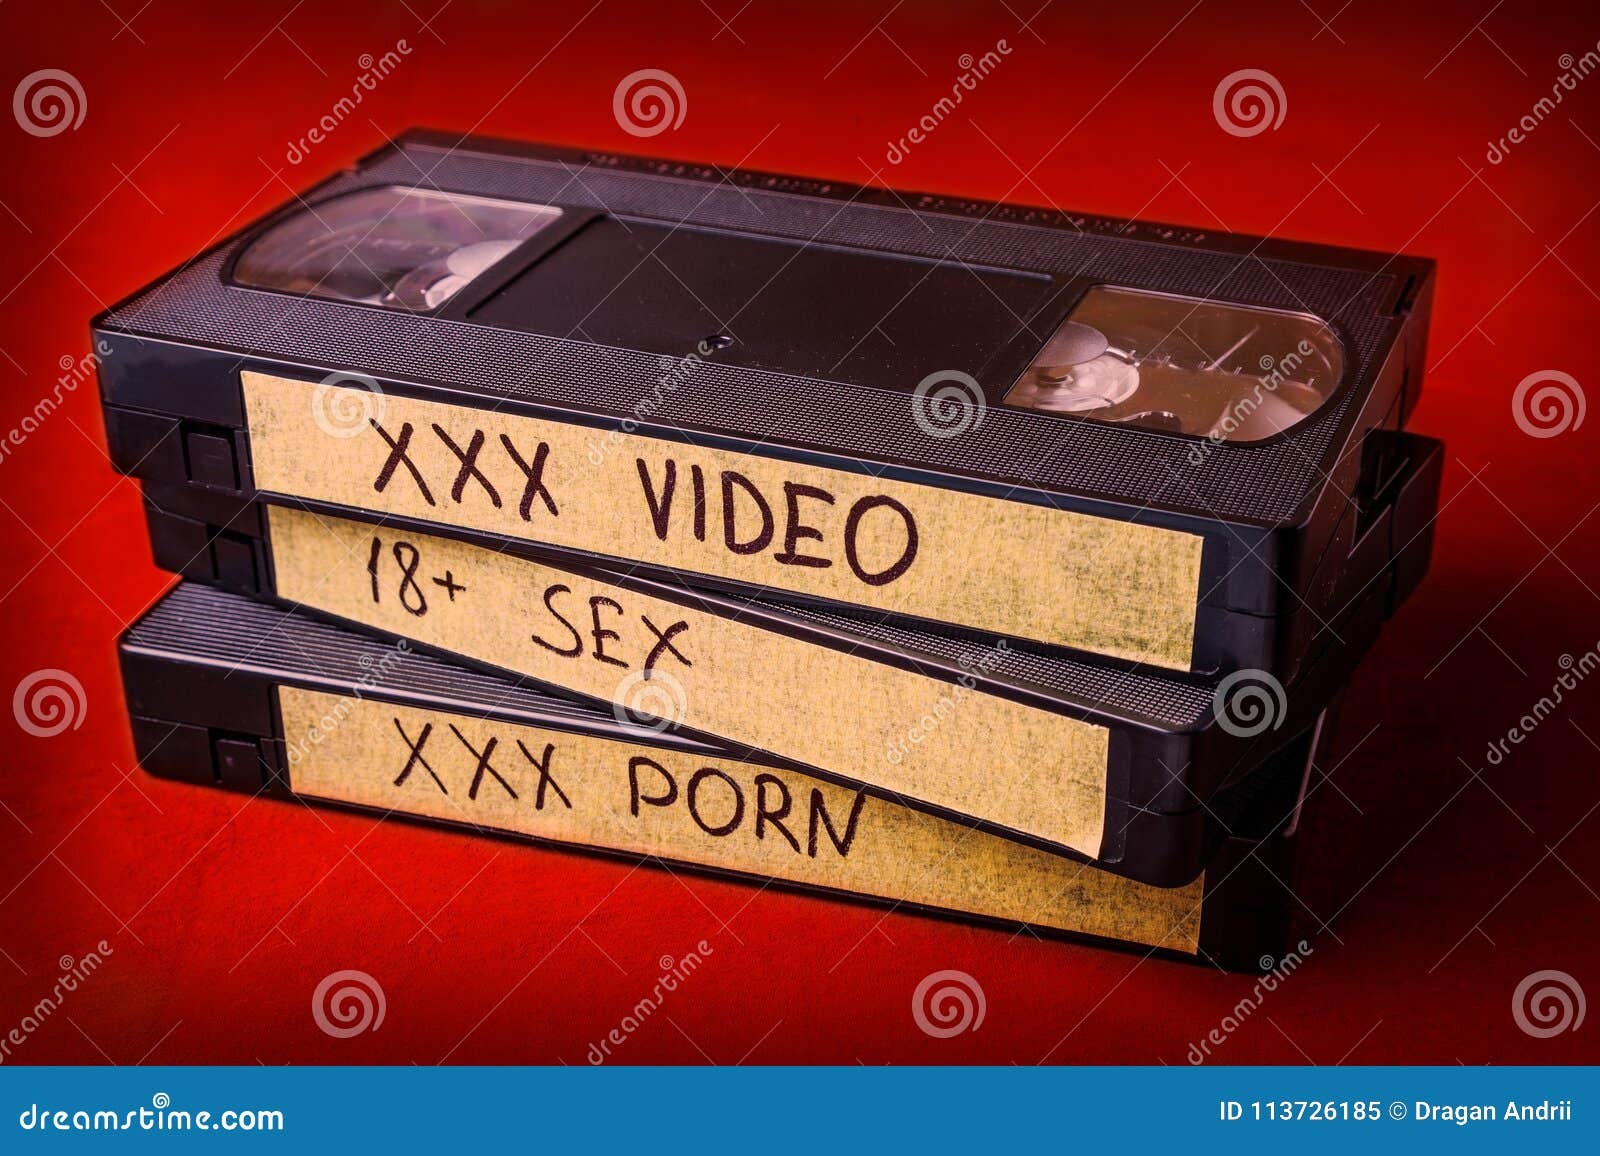 alejandra sauceda recommends Vhs Tape Porn